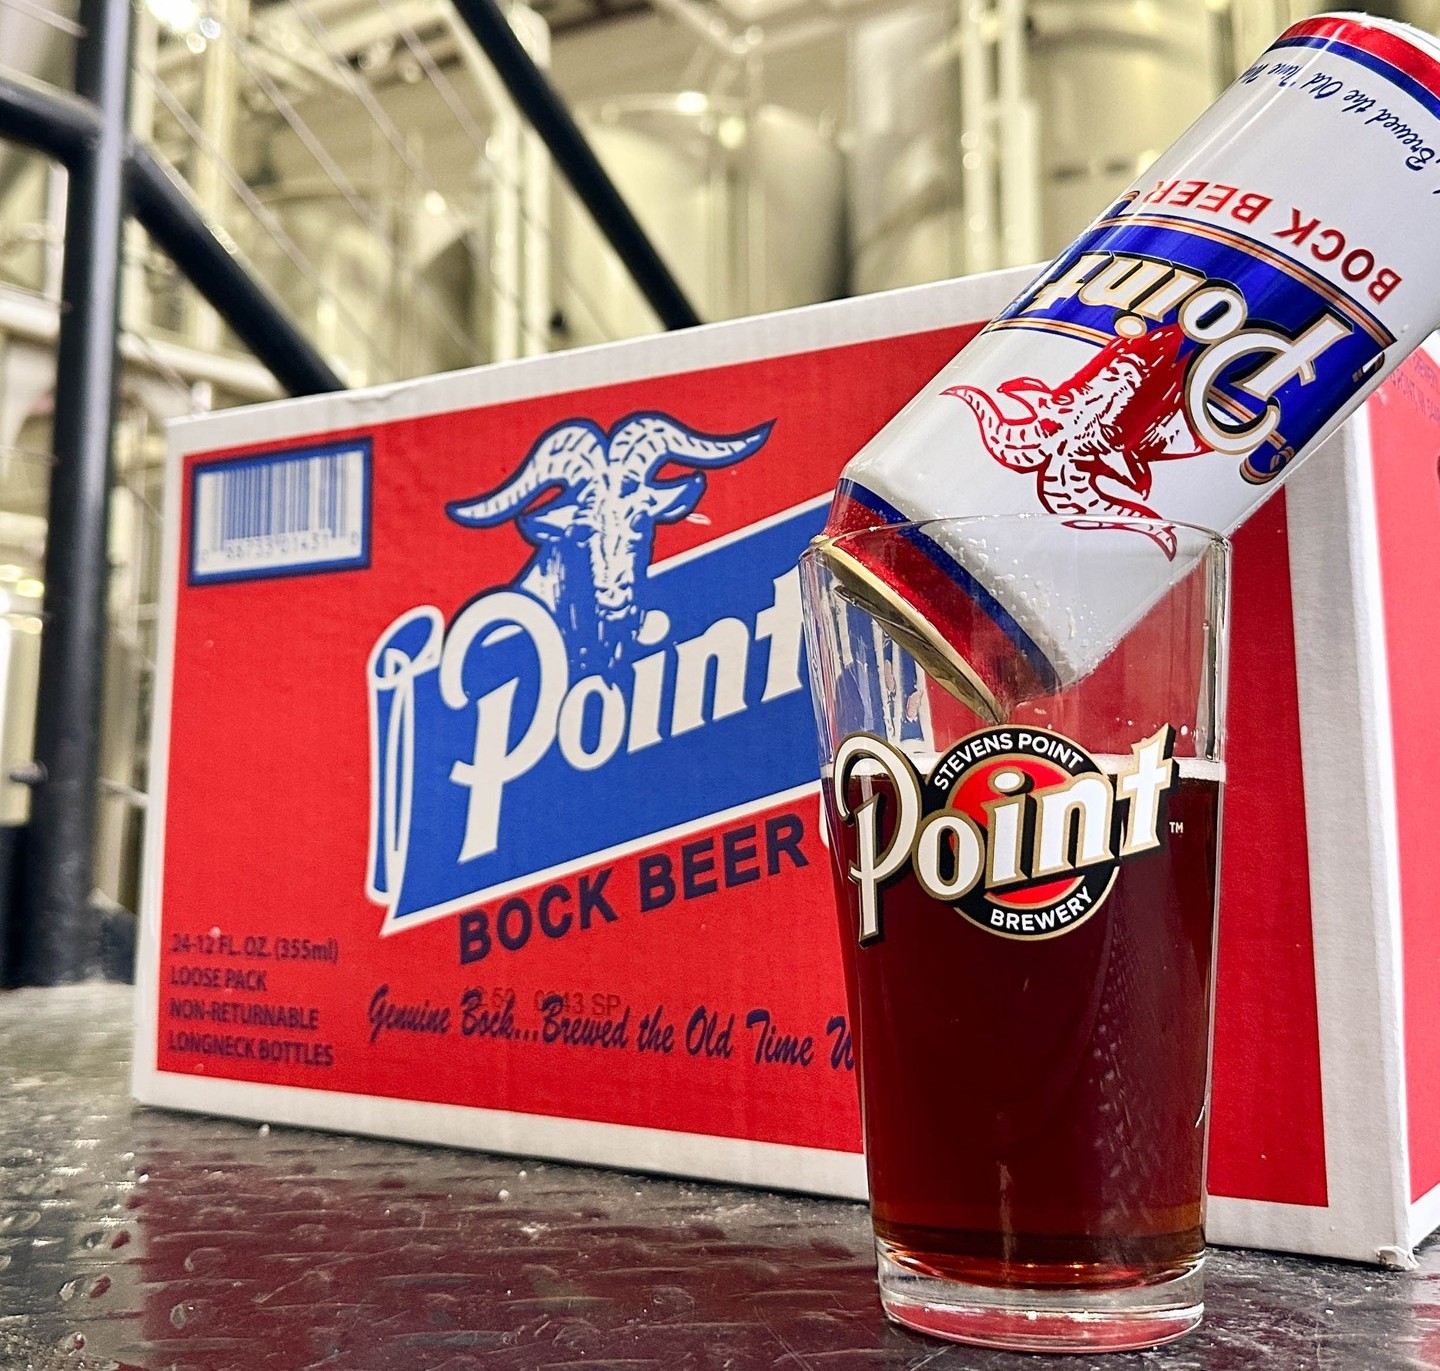 Stevens Point Brewery Point Bock Beer Returns thumbnail